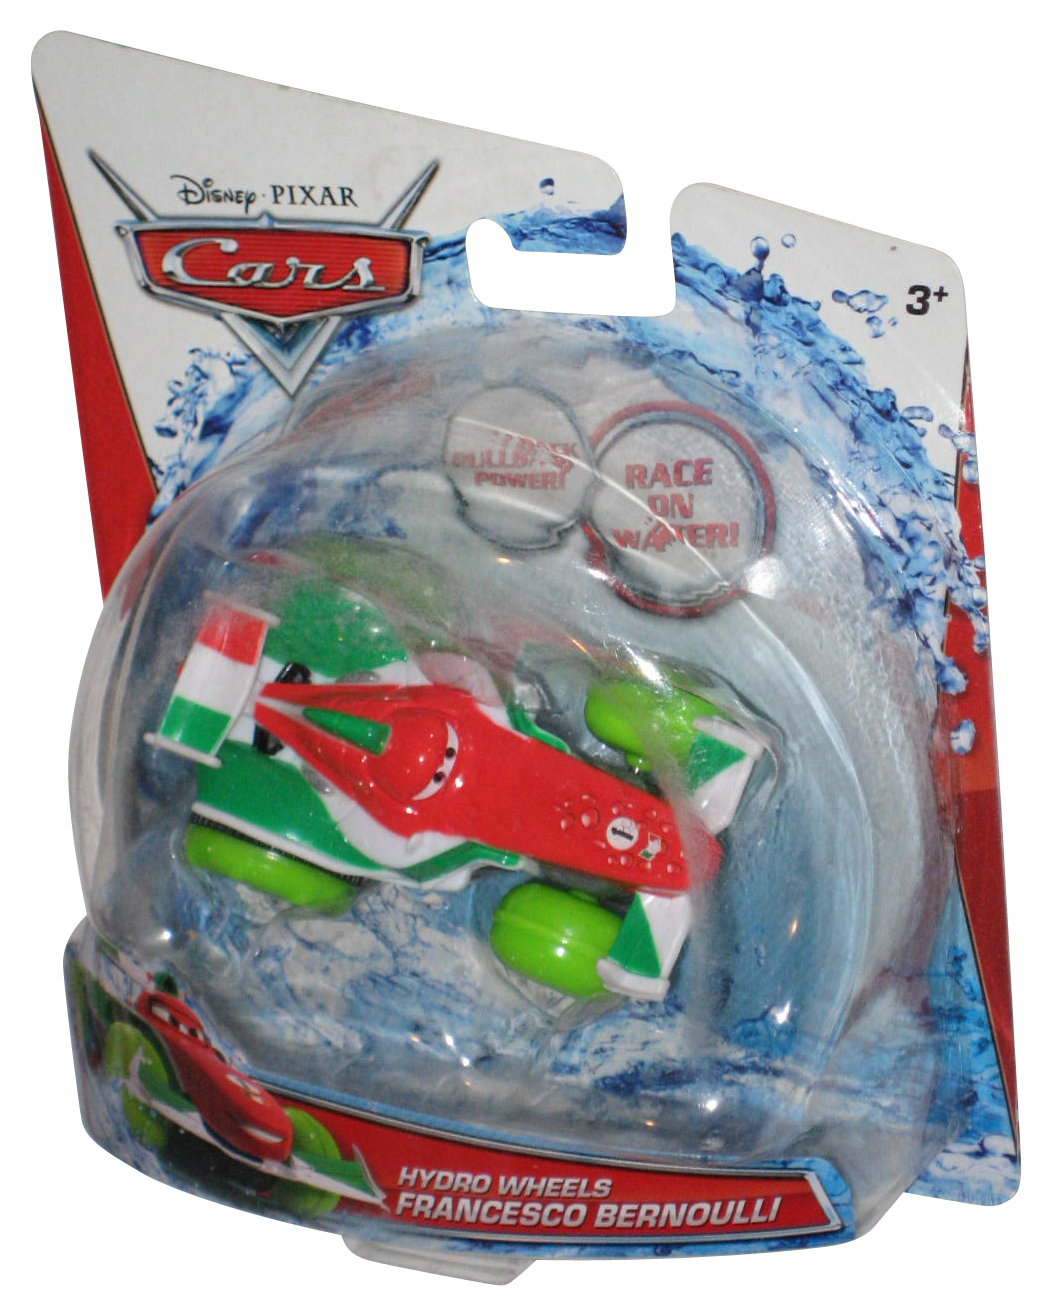 Disney Pixar Cars Race On Water (2015) Mattel Hydro Wheels Francesco Bernoulli Car Toy - image 1 of 2